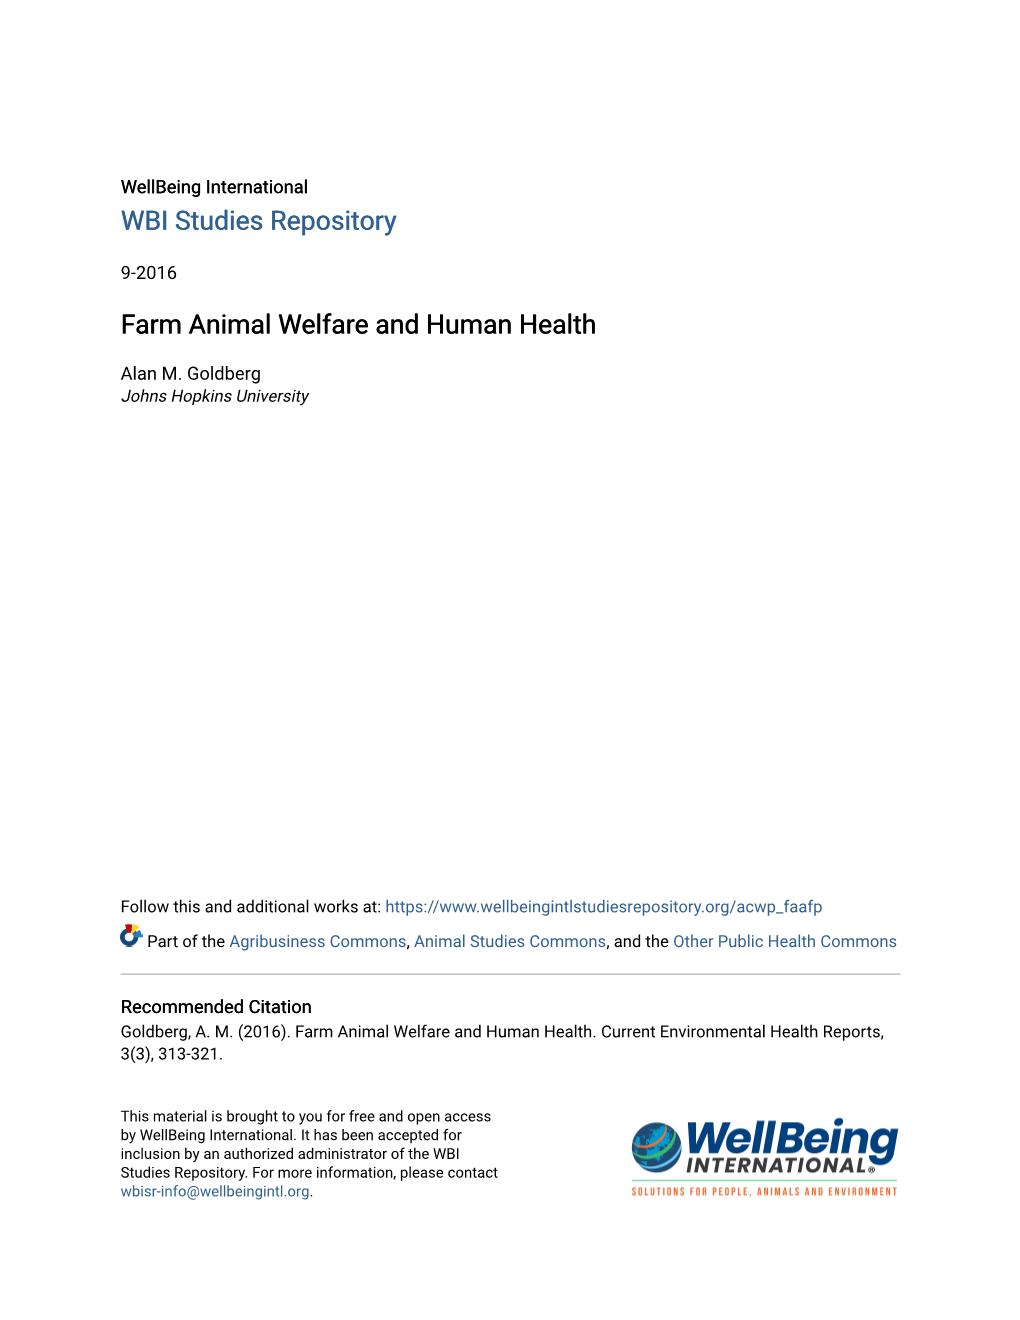 Farm Animal Welfare and Human Health